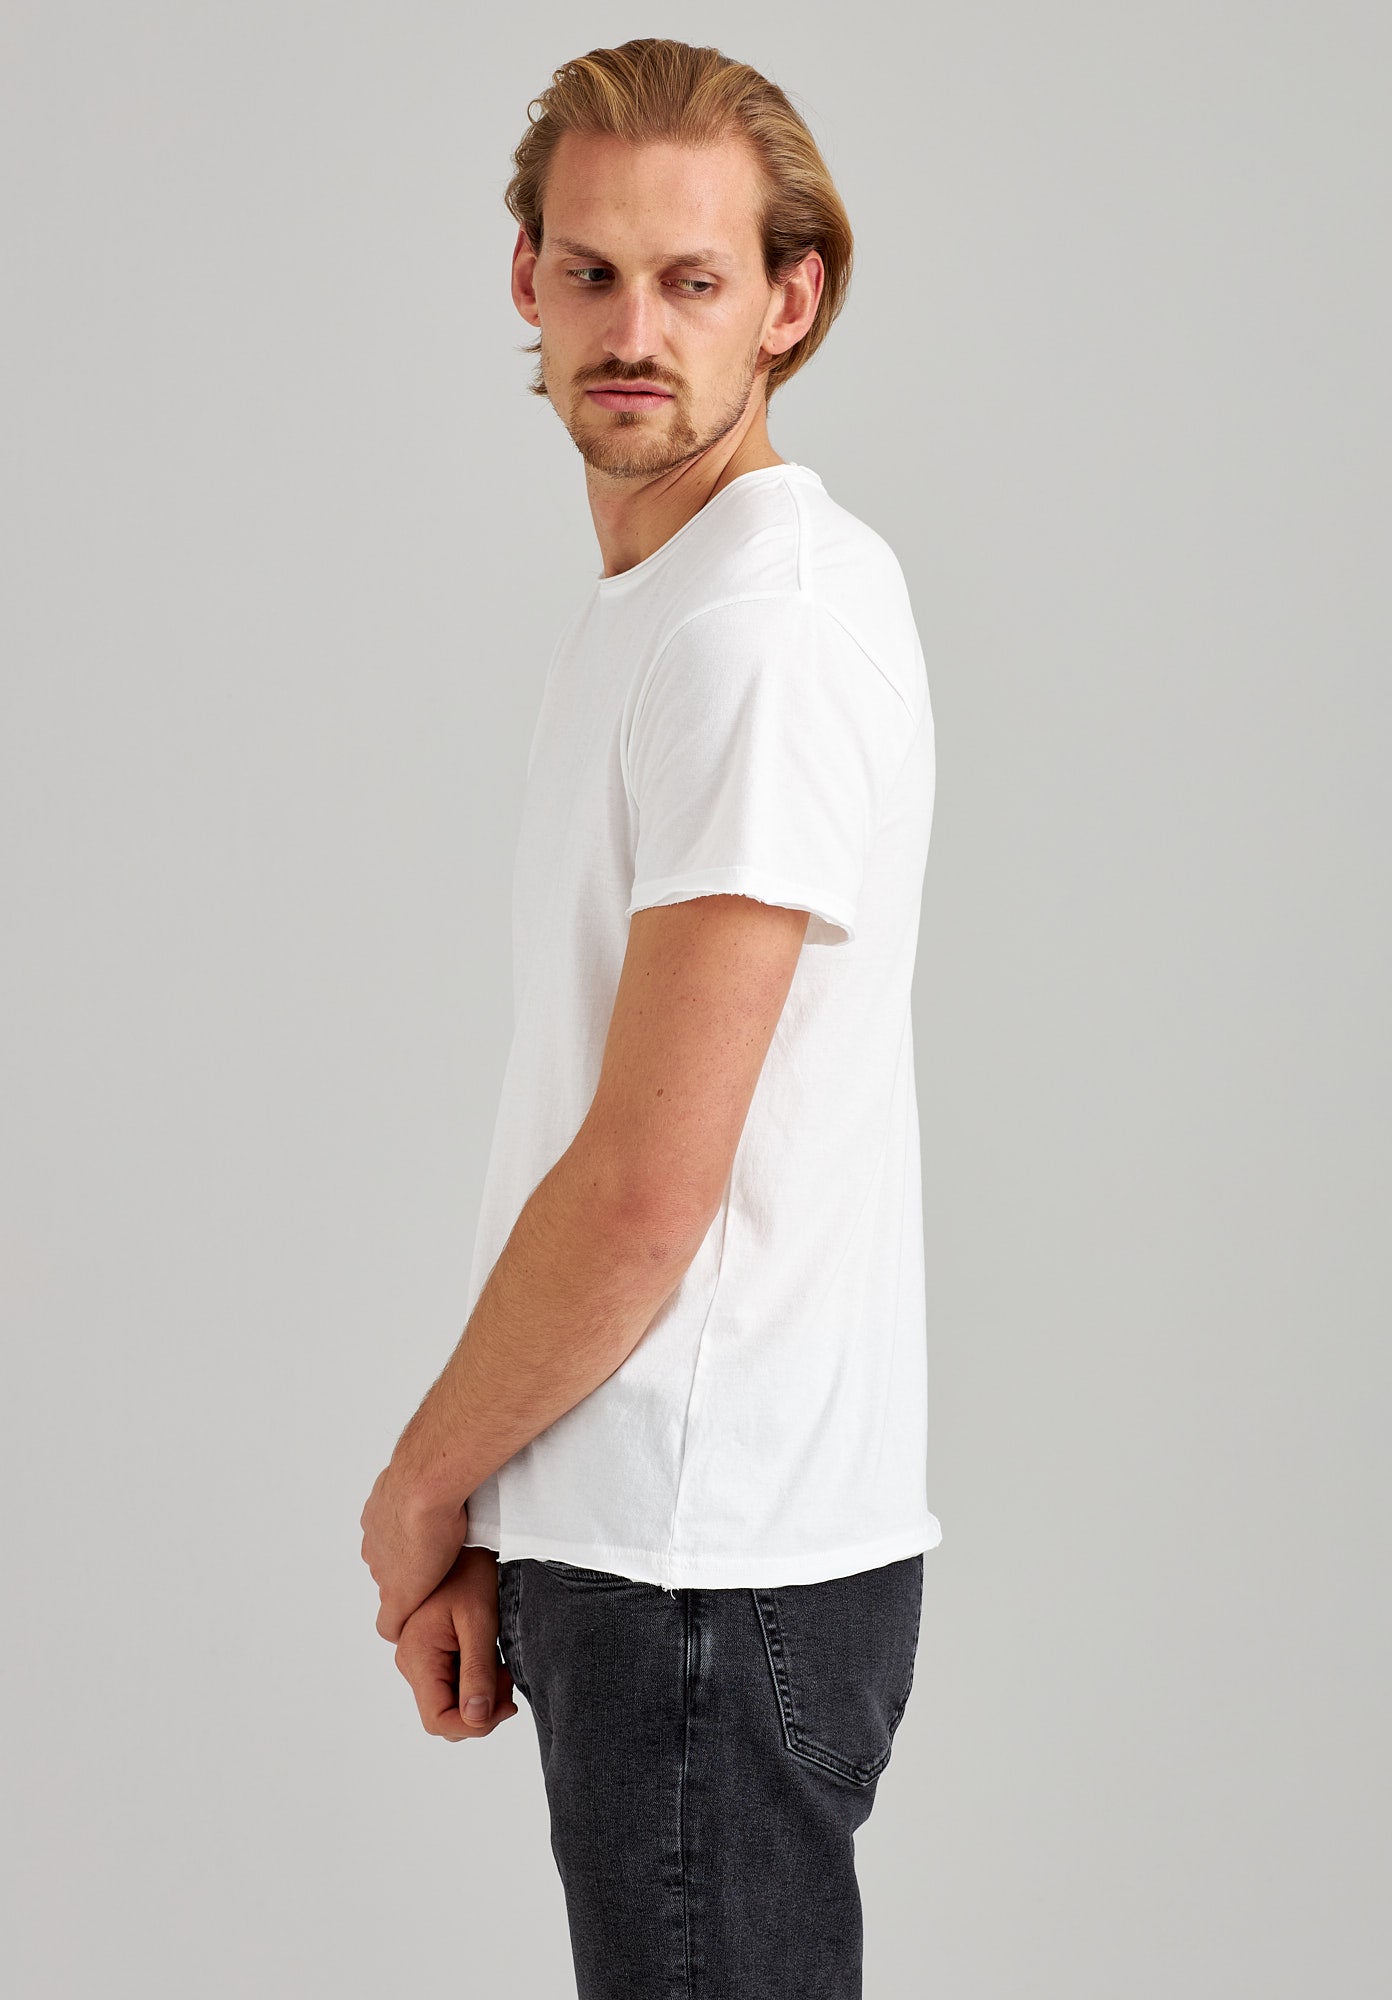 TT65 T-Shirt White (GOTS)